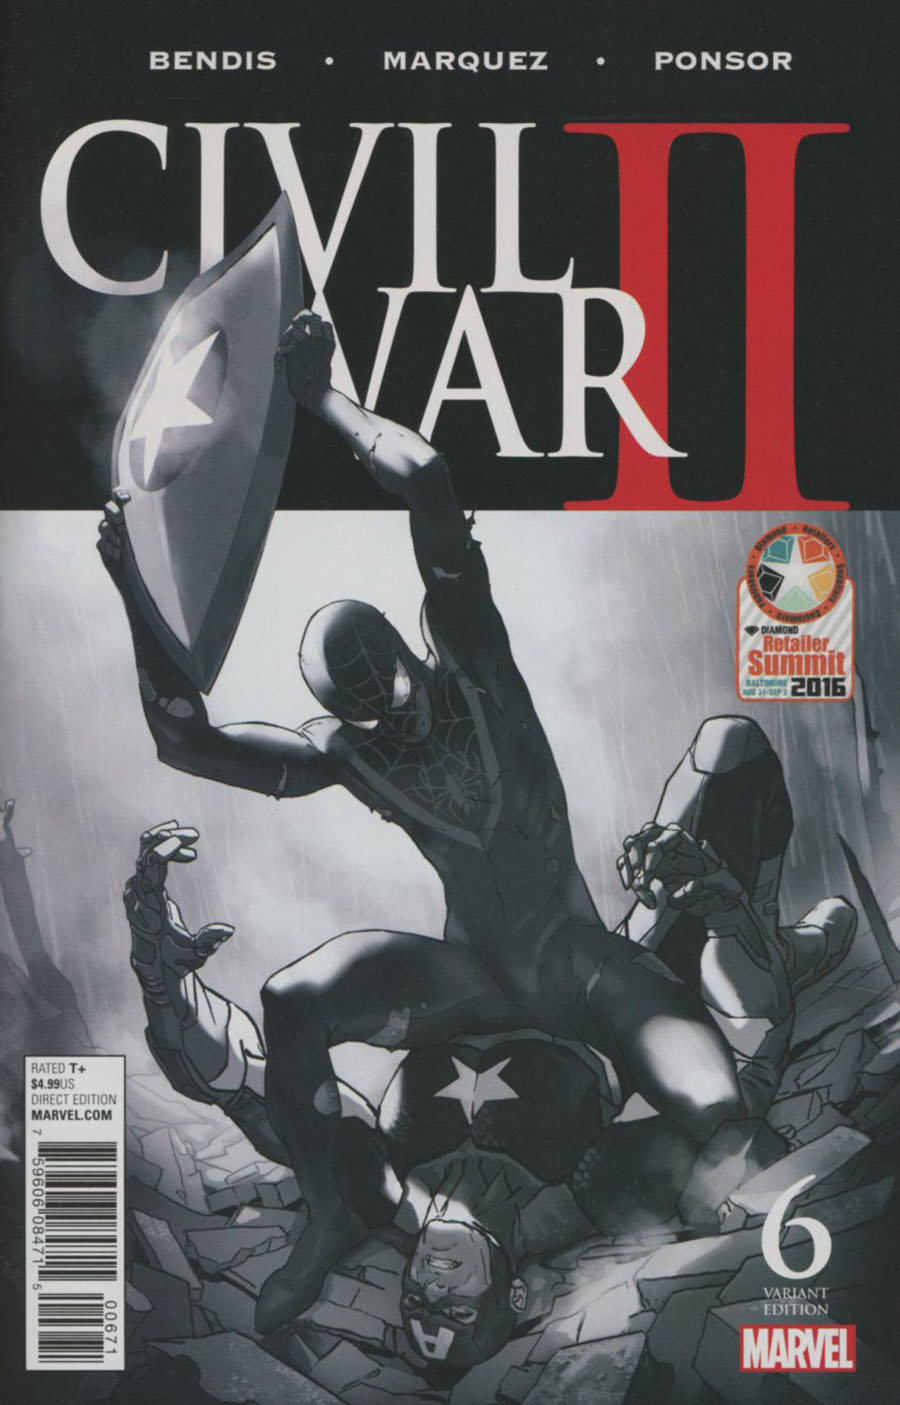 Civil War II #6 Cover E Retailer Summit 2016 Exclusive Marko Djurdjevic Black & White Cover